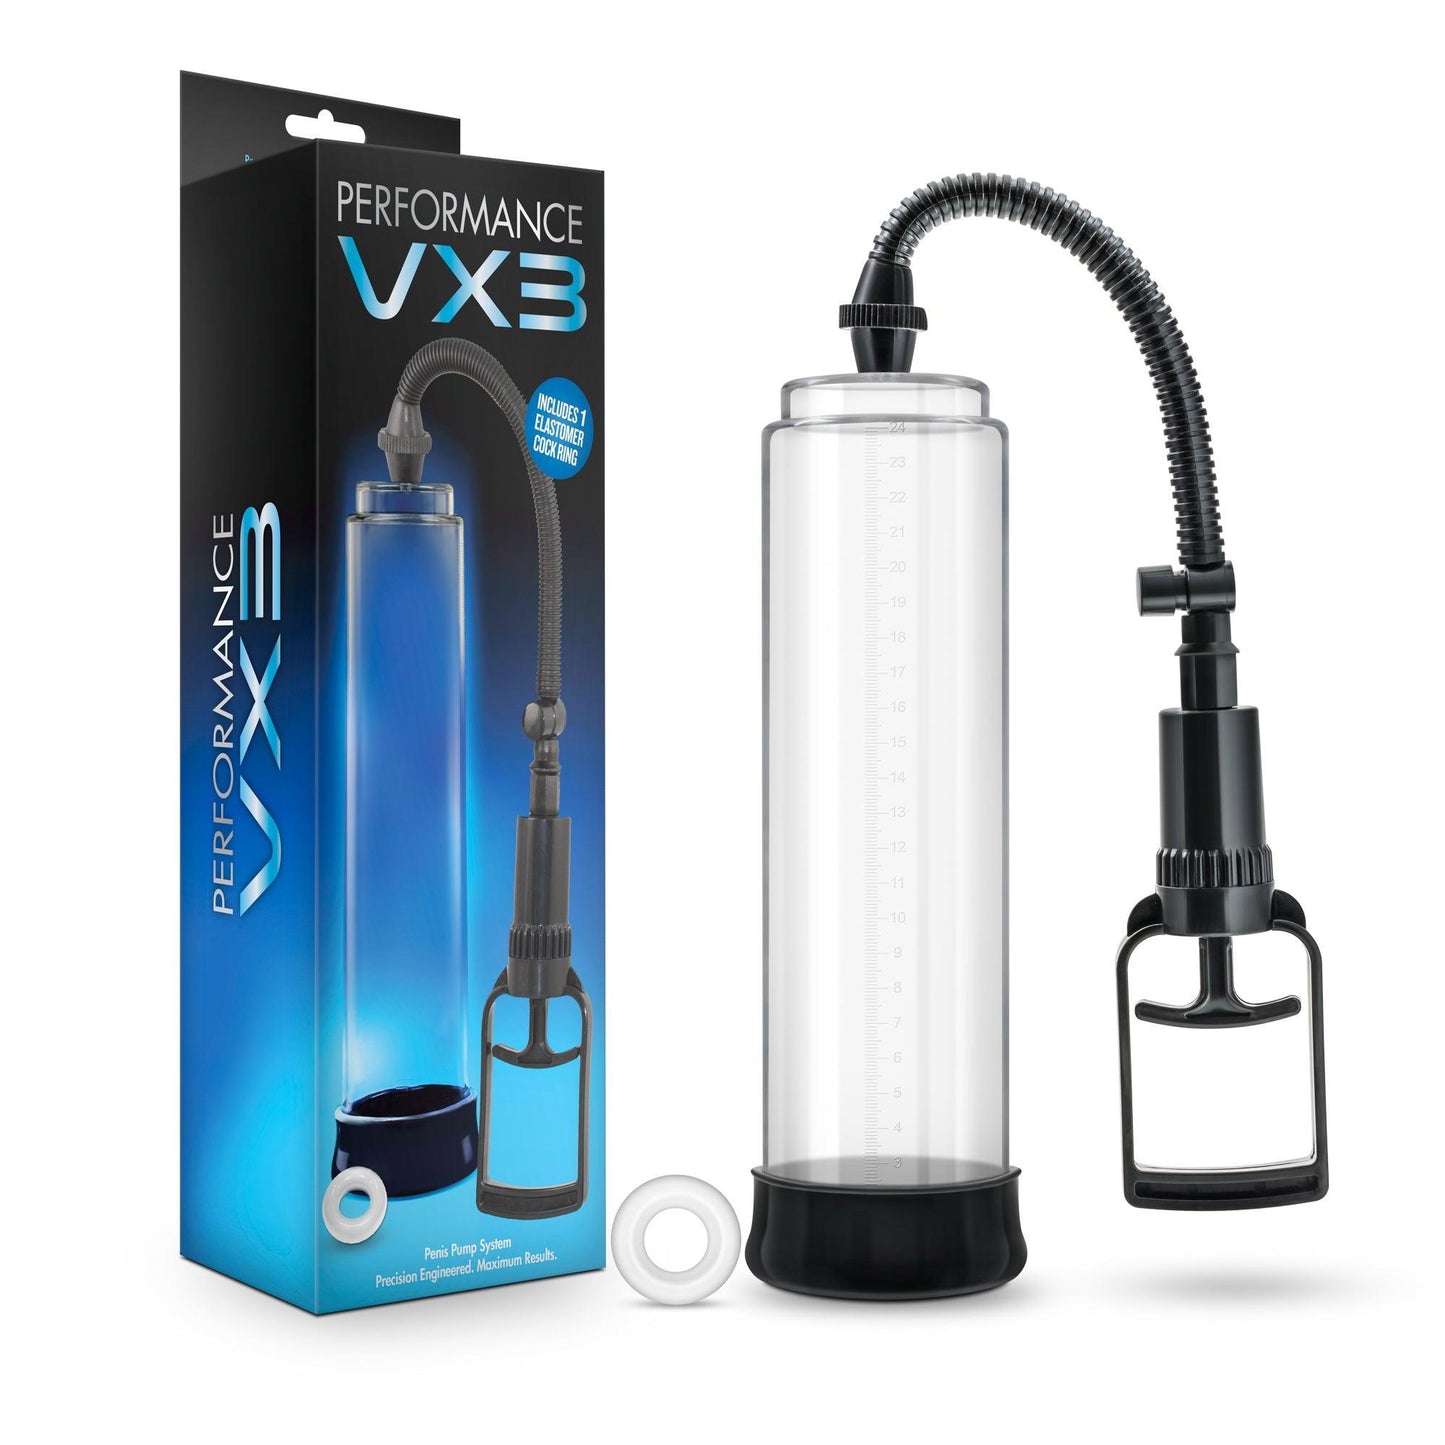 Performance Vx3 - Male Enhancement Pump System - Clear - My Sex Toy Hub